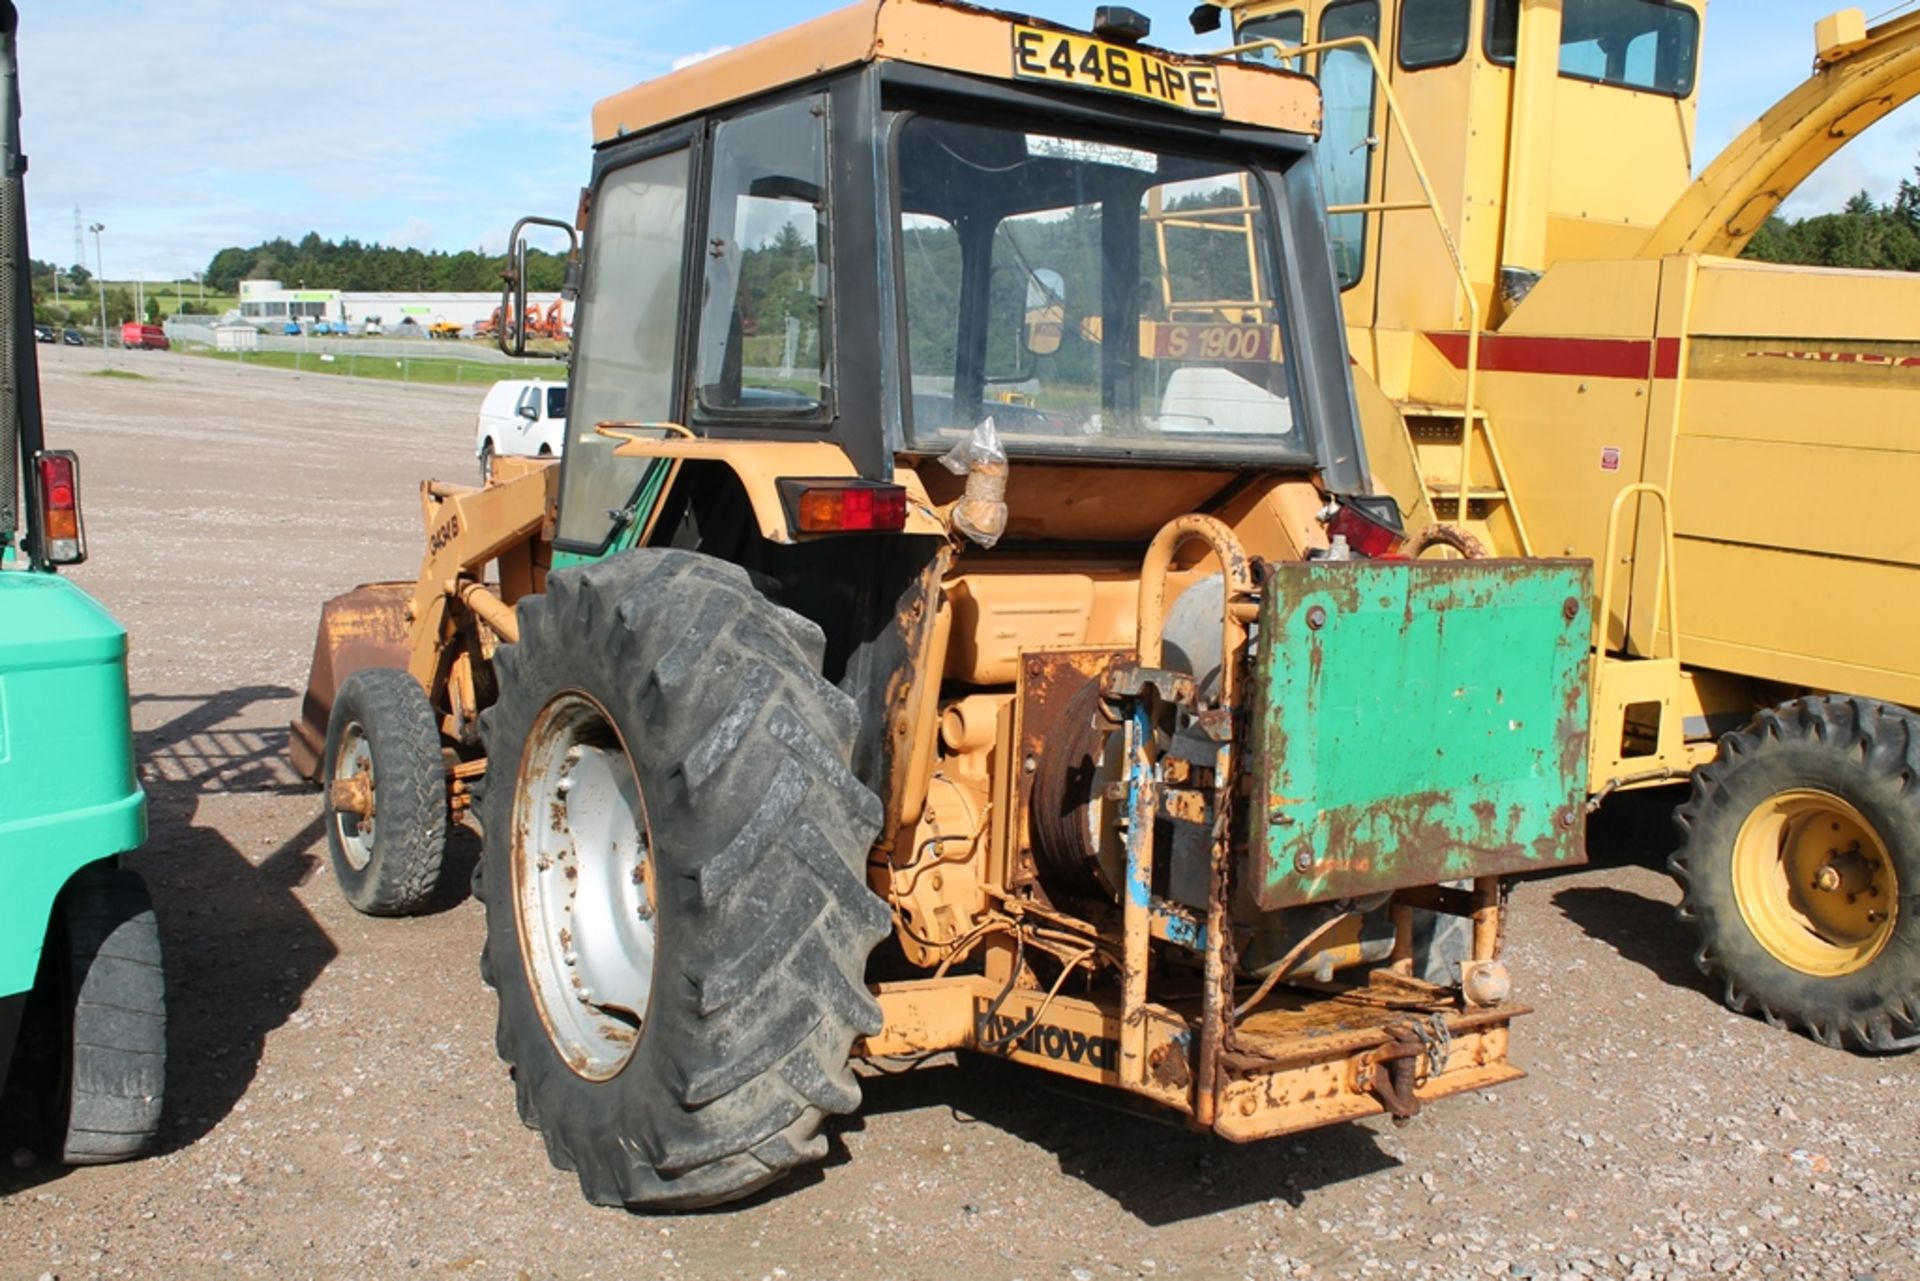 Case International 3434B - 0cc Tractor - Image 2 of 6